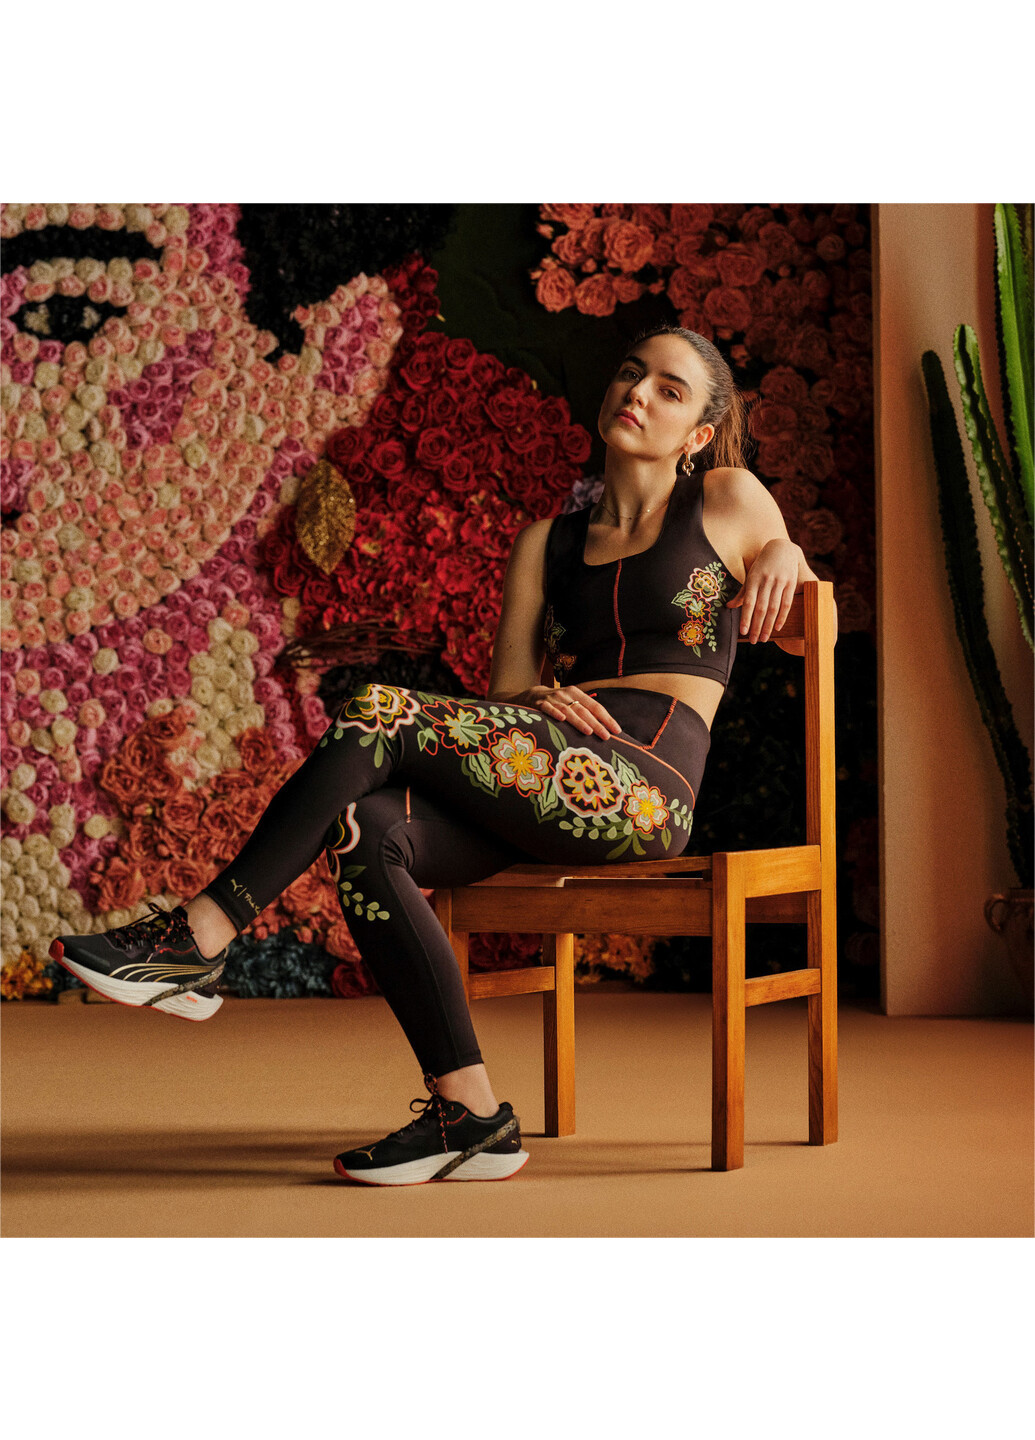 Puma x Frida Kahlo 7/8 Tight Black Floral Print Leggings Women's Size Small